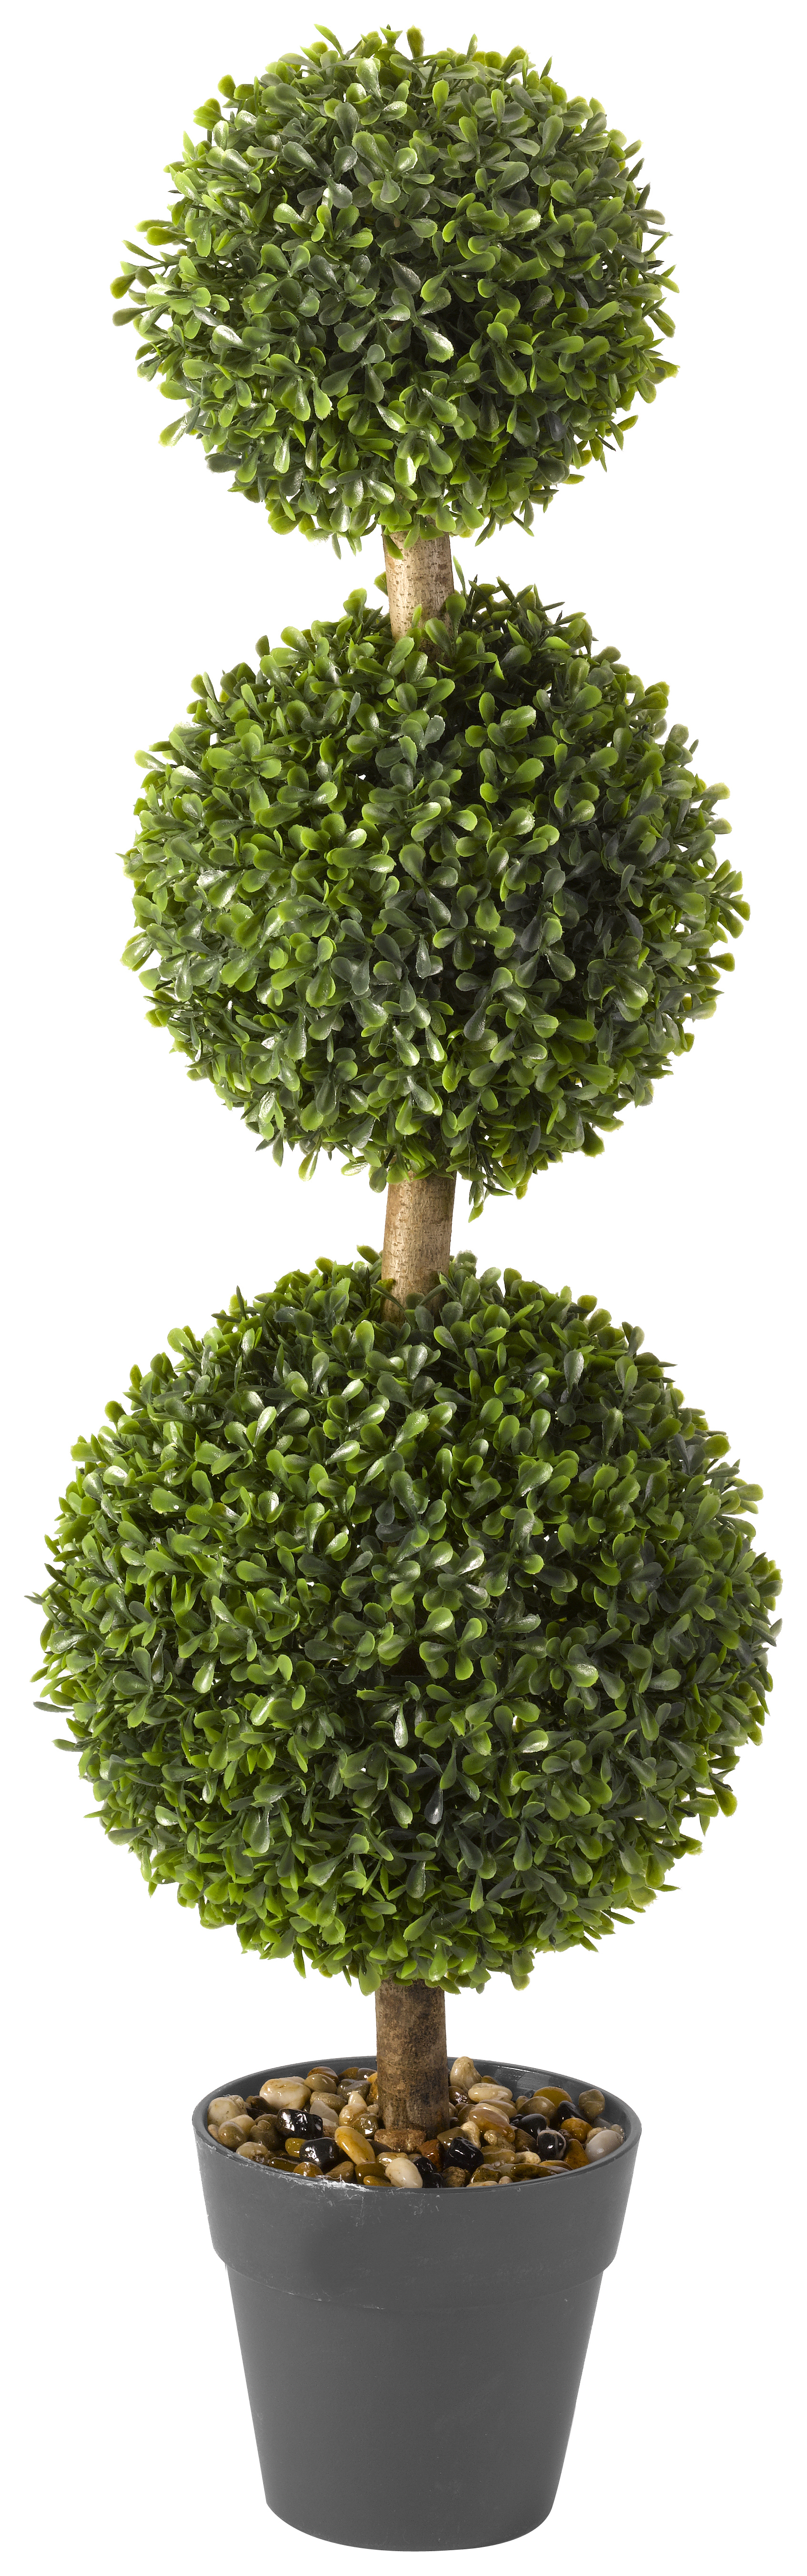 Image of Smart Garden Trio Topiary Tree - 82cm